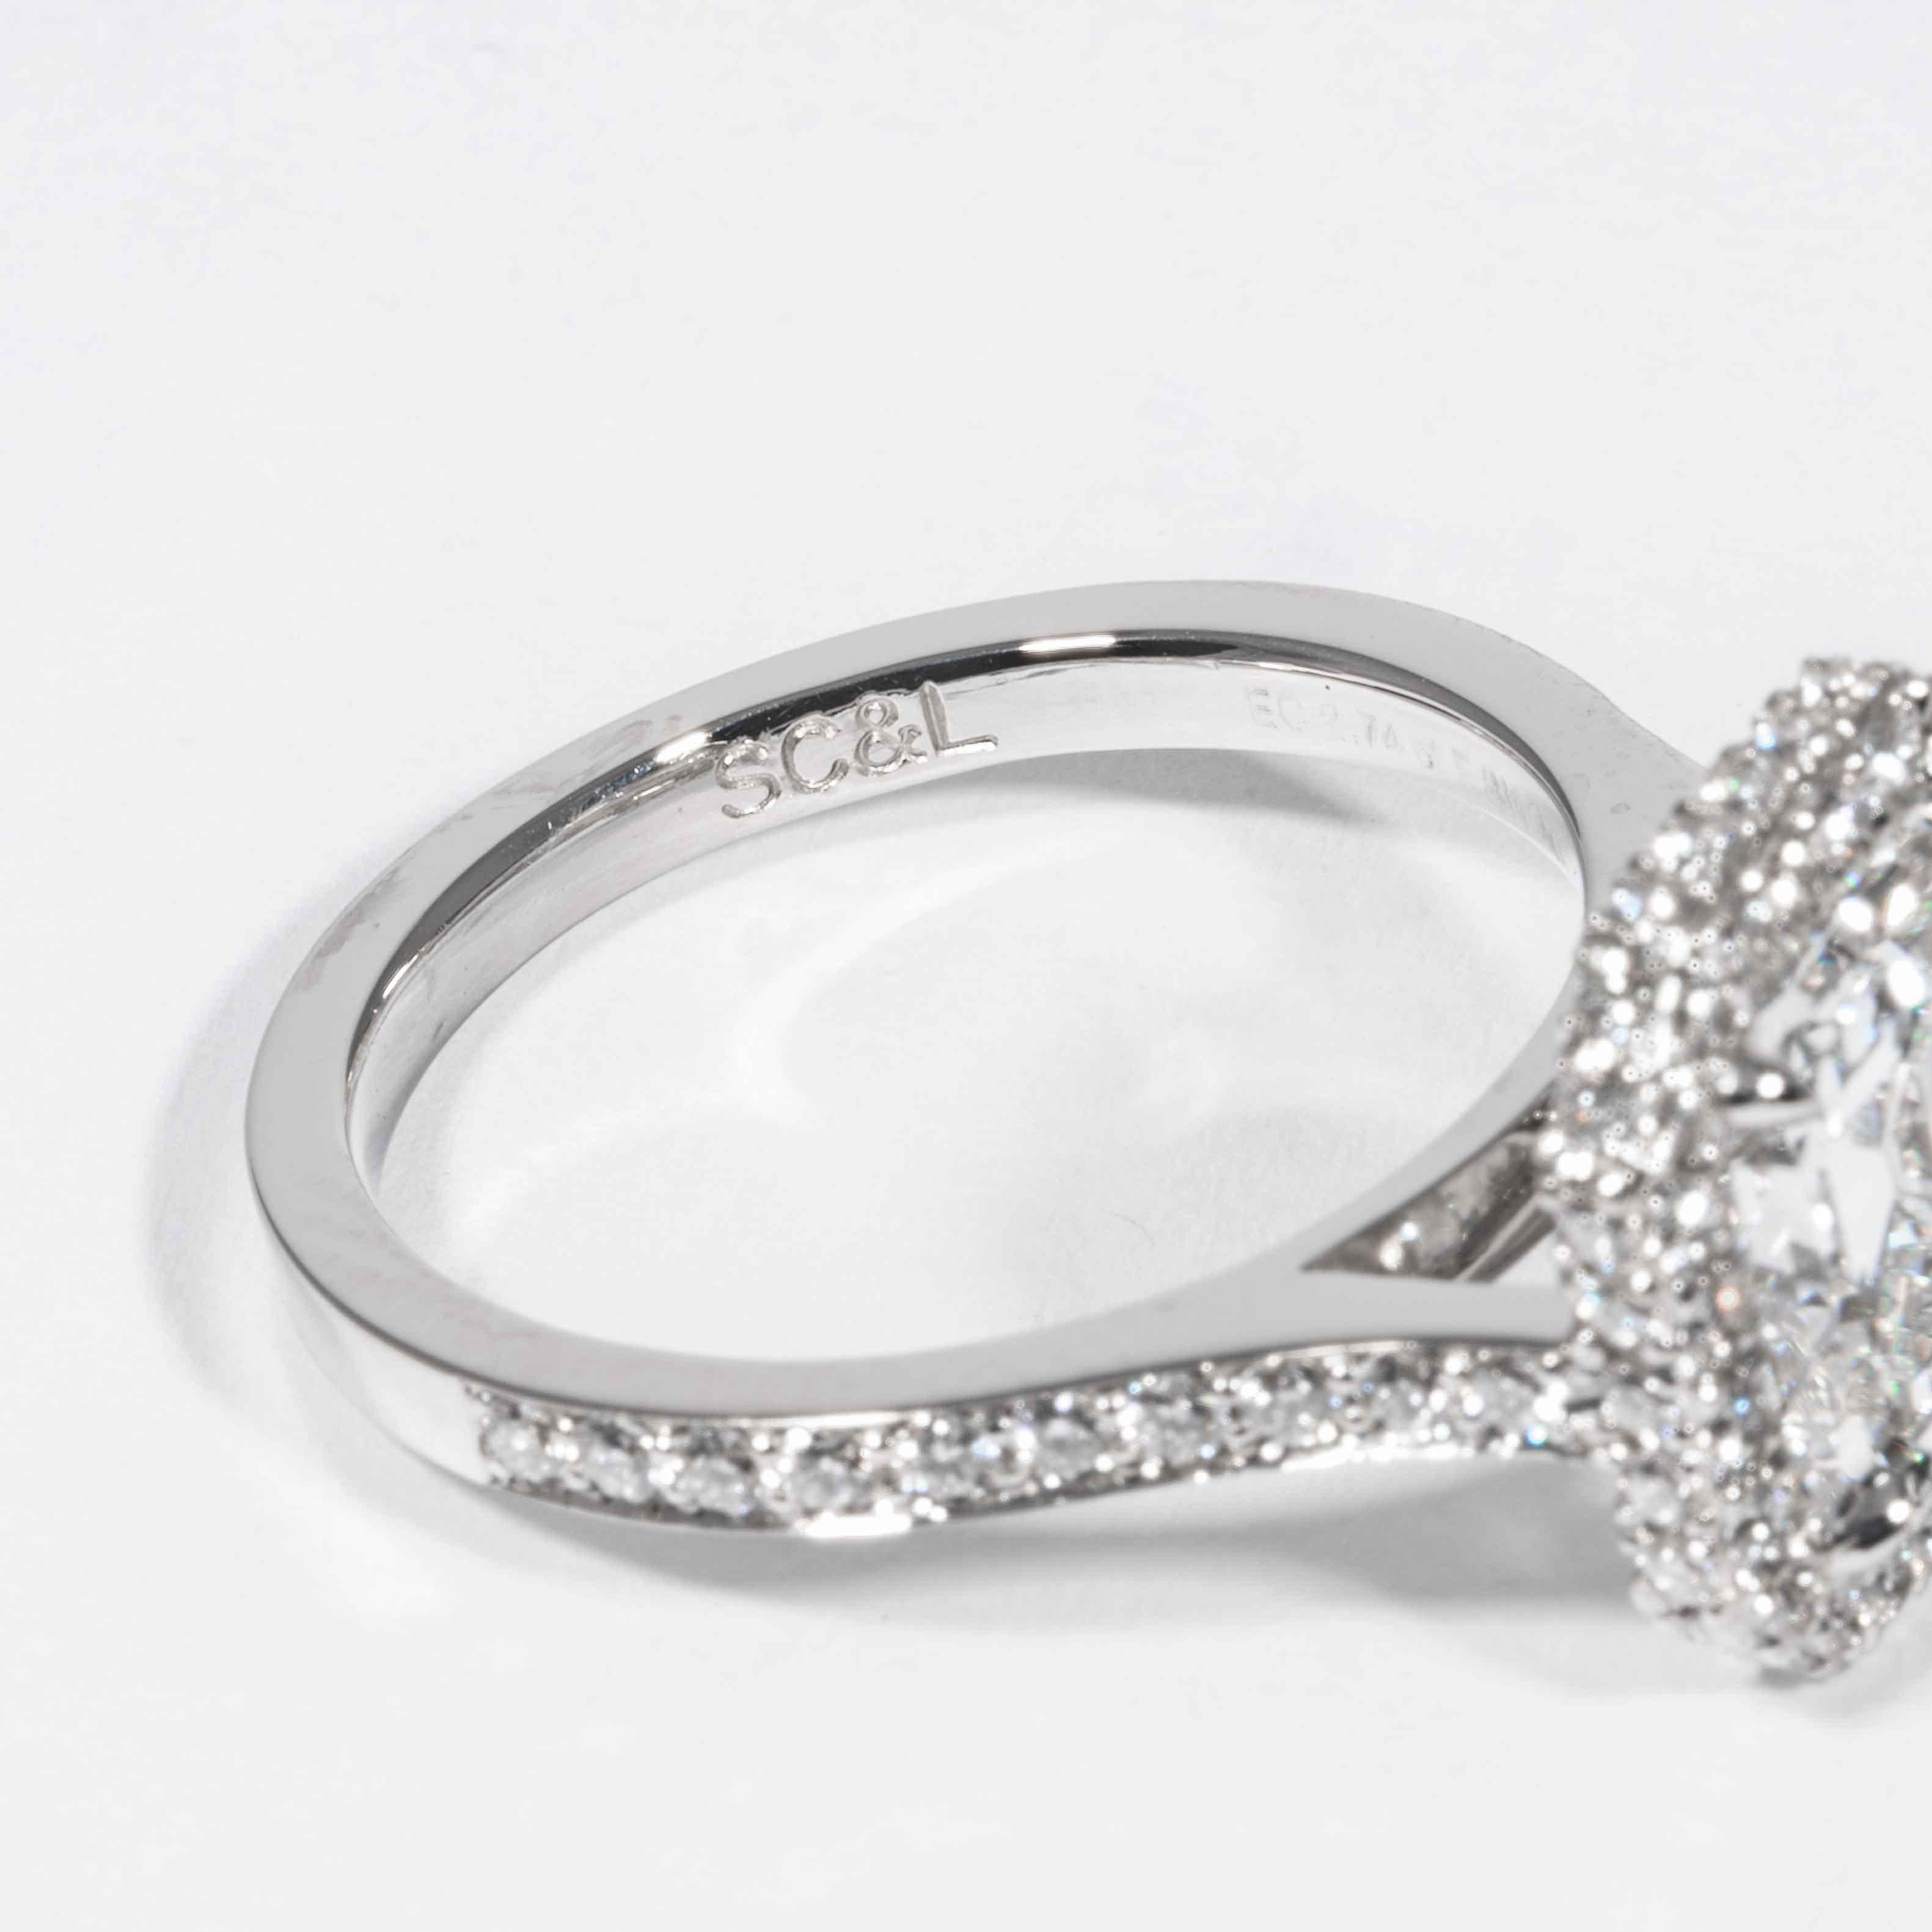 Shreve, Crump & Low GIA Certified 2.74 Carat E SI1 Emerald Cut Diamond Ring 1